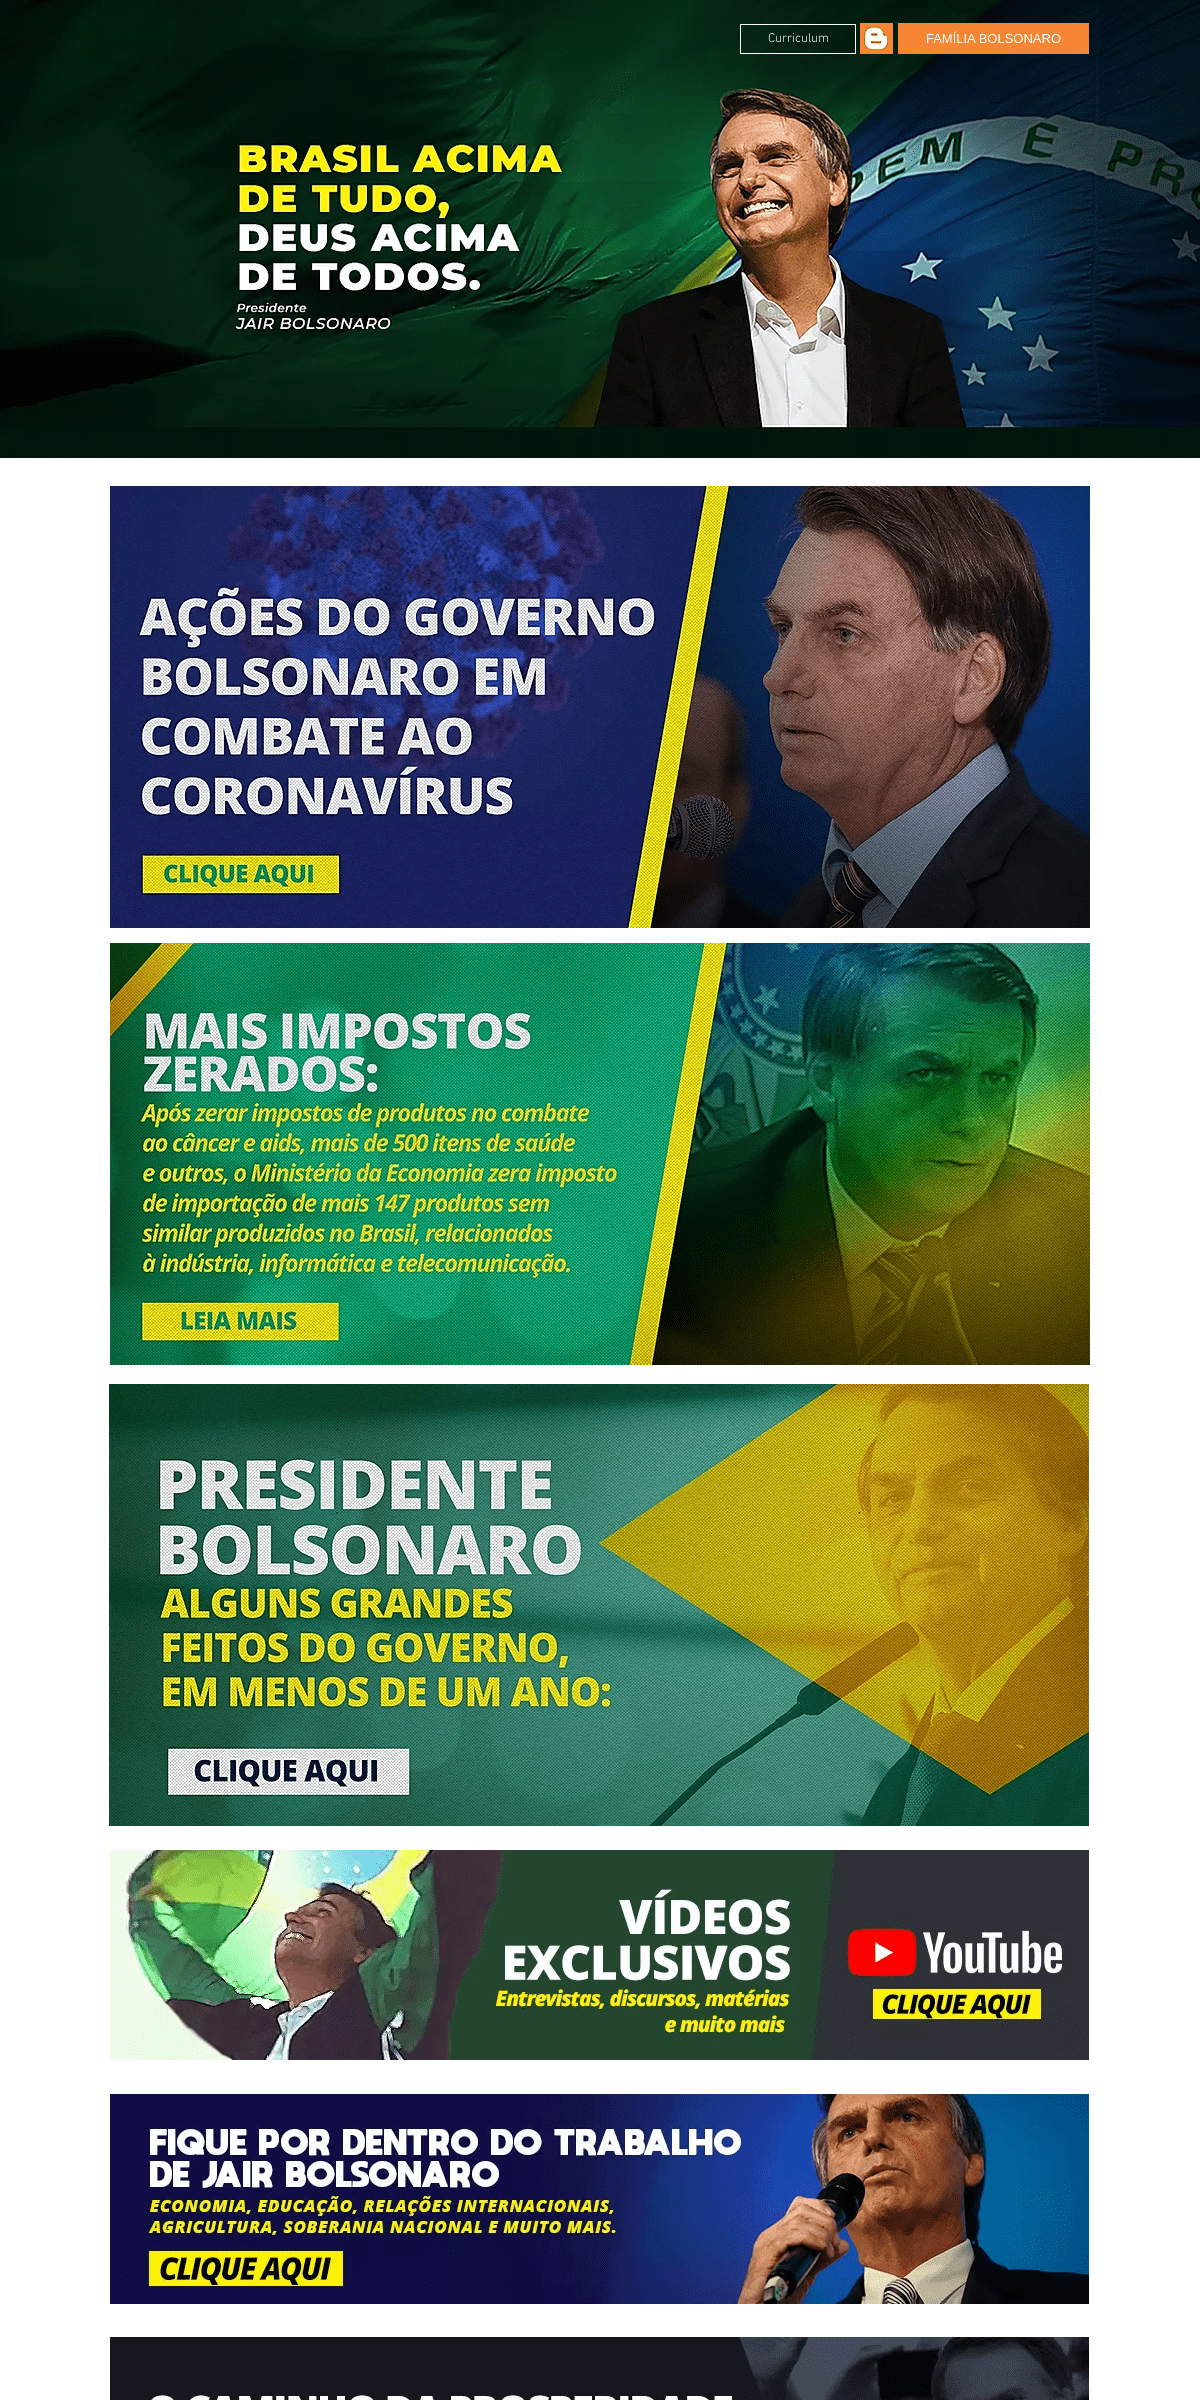 A complete backup of bolsonaro.com.br